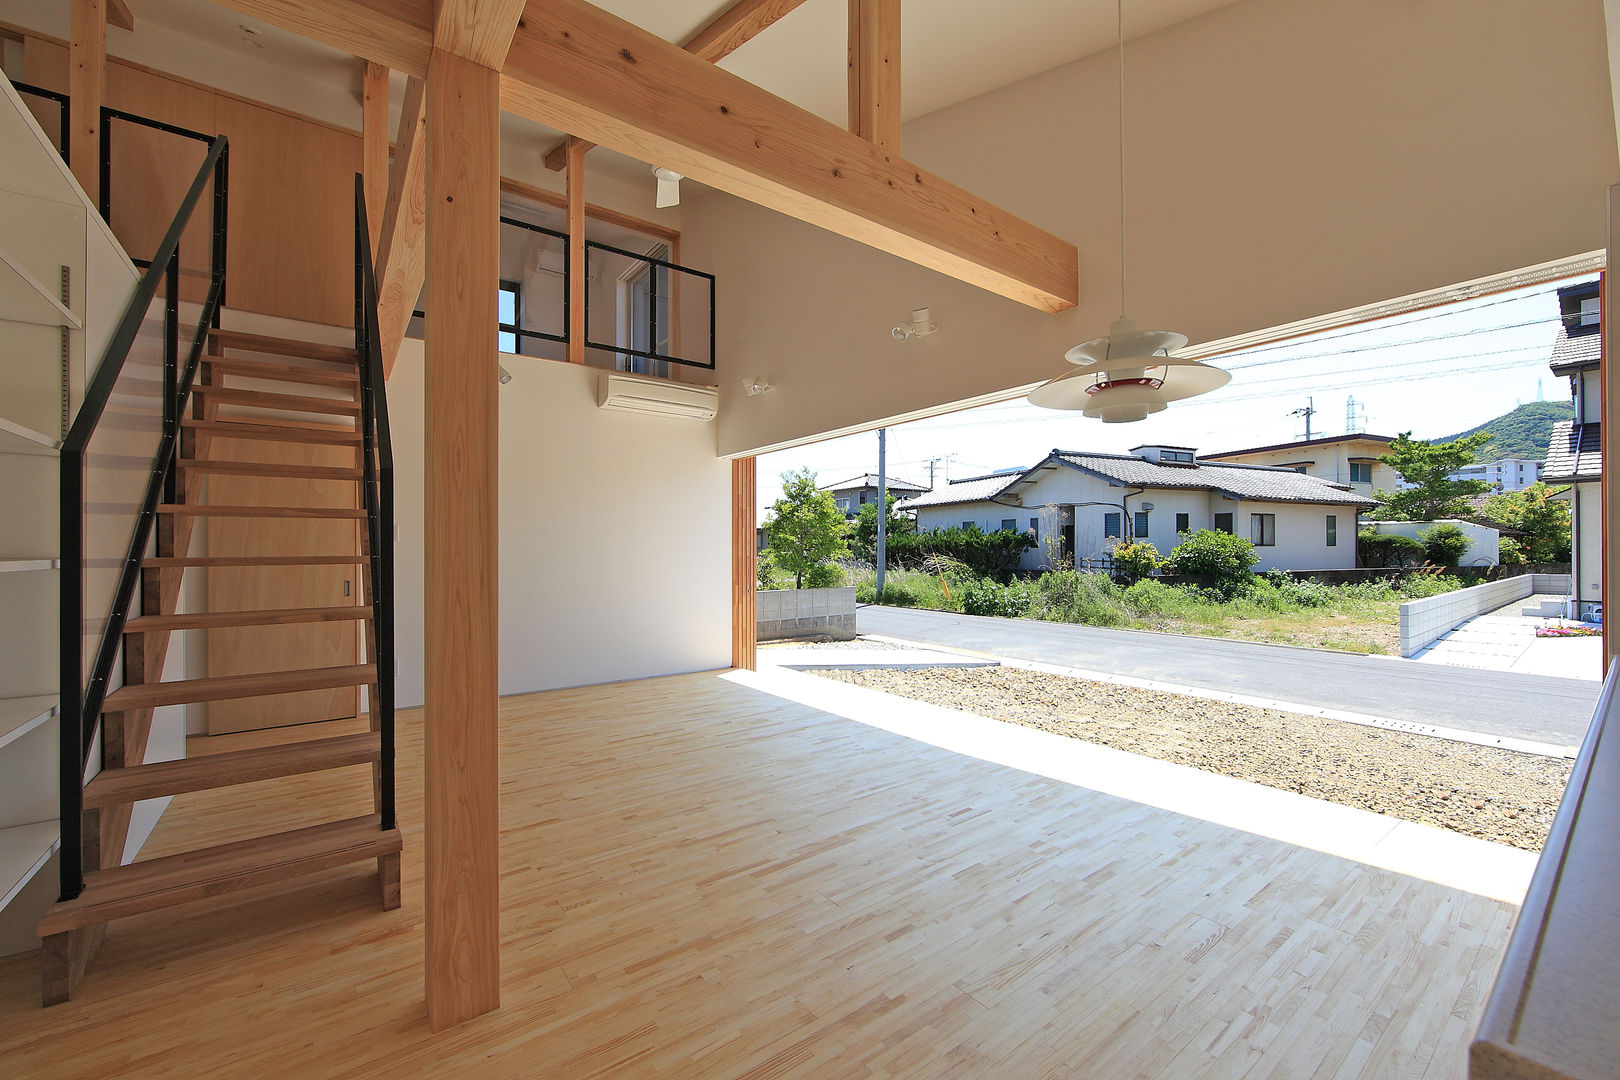 House-S【 ヒトツナガリノイエ 】, bound-design bound-design ห้องนั่งเล่น